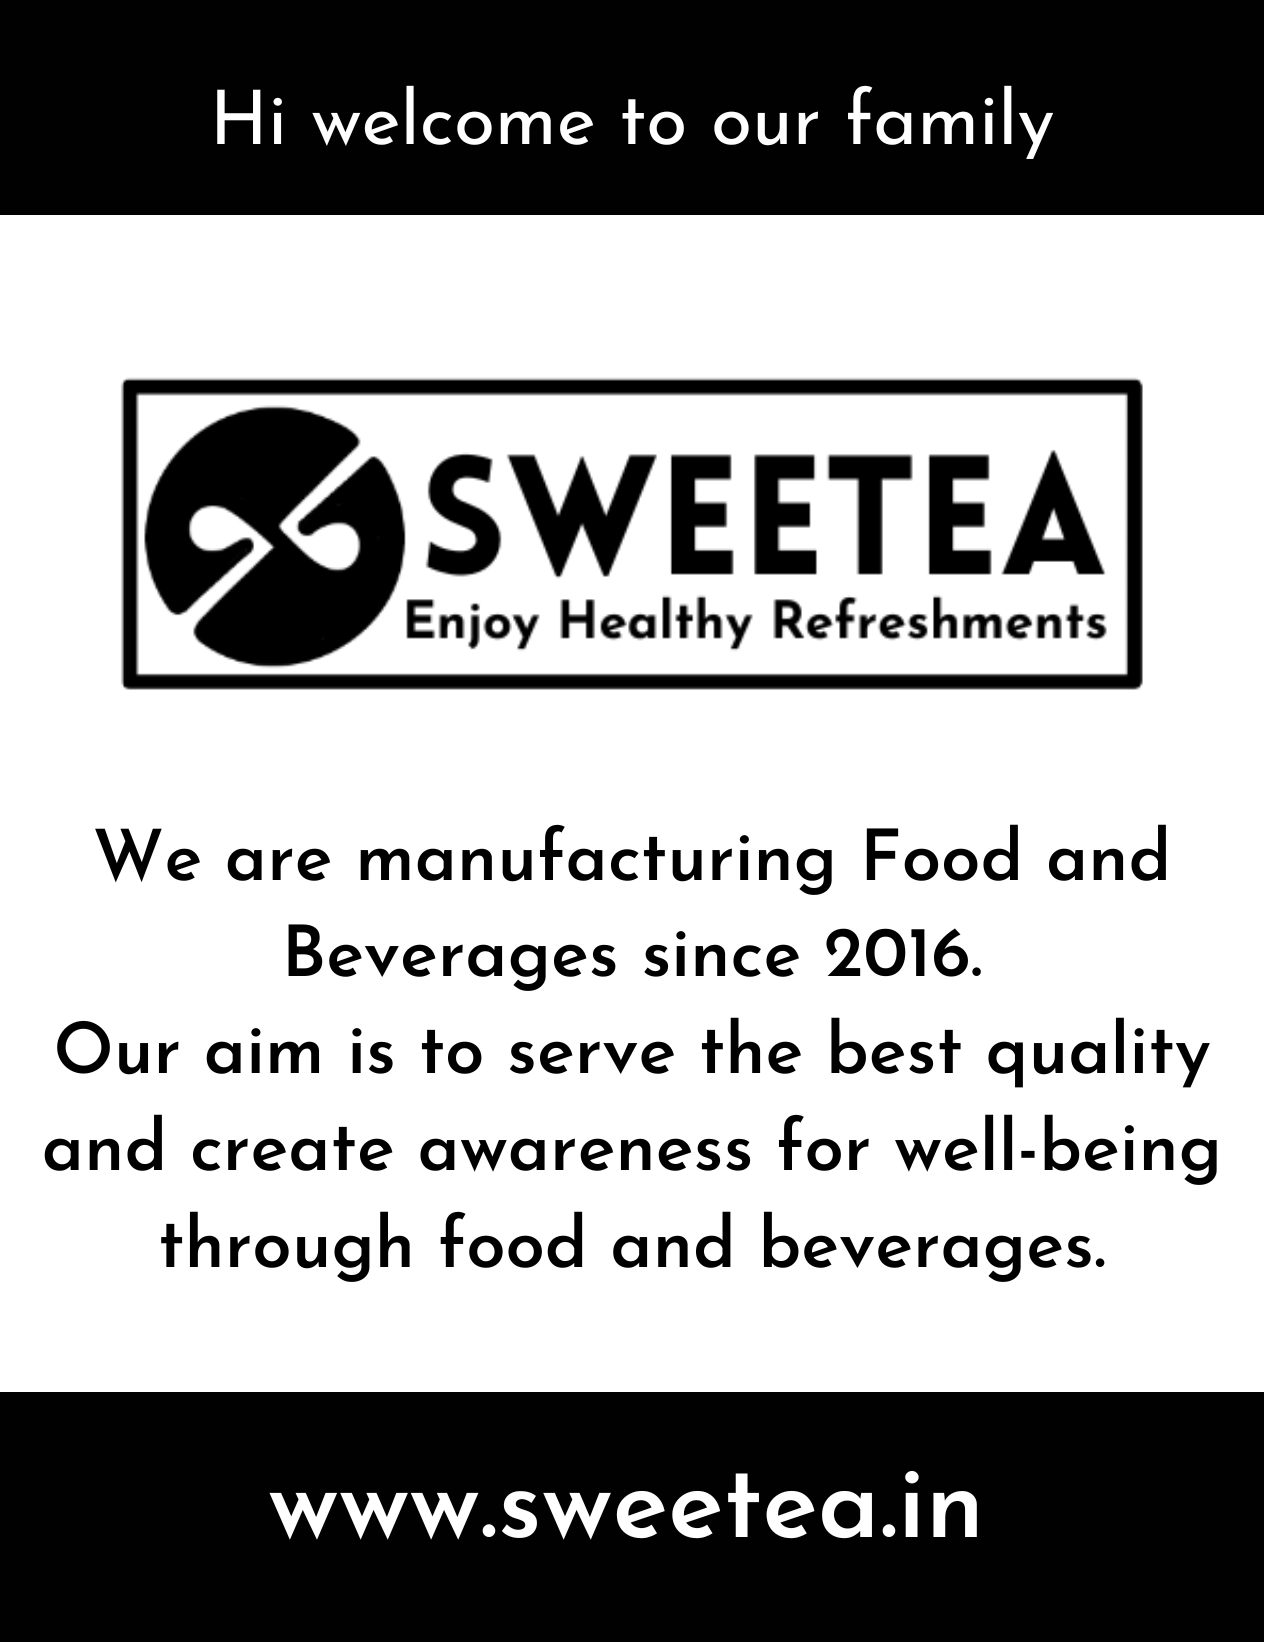 Sweetea food and beverage manufacturer. wellness